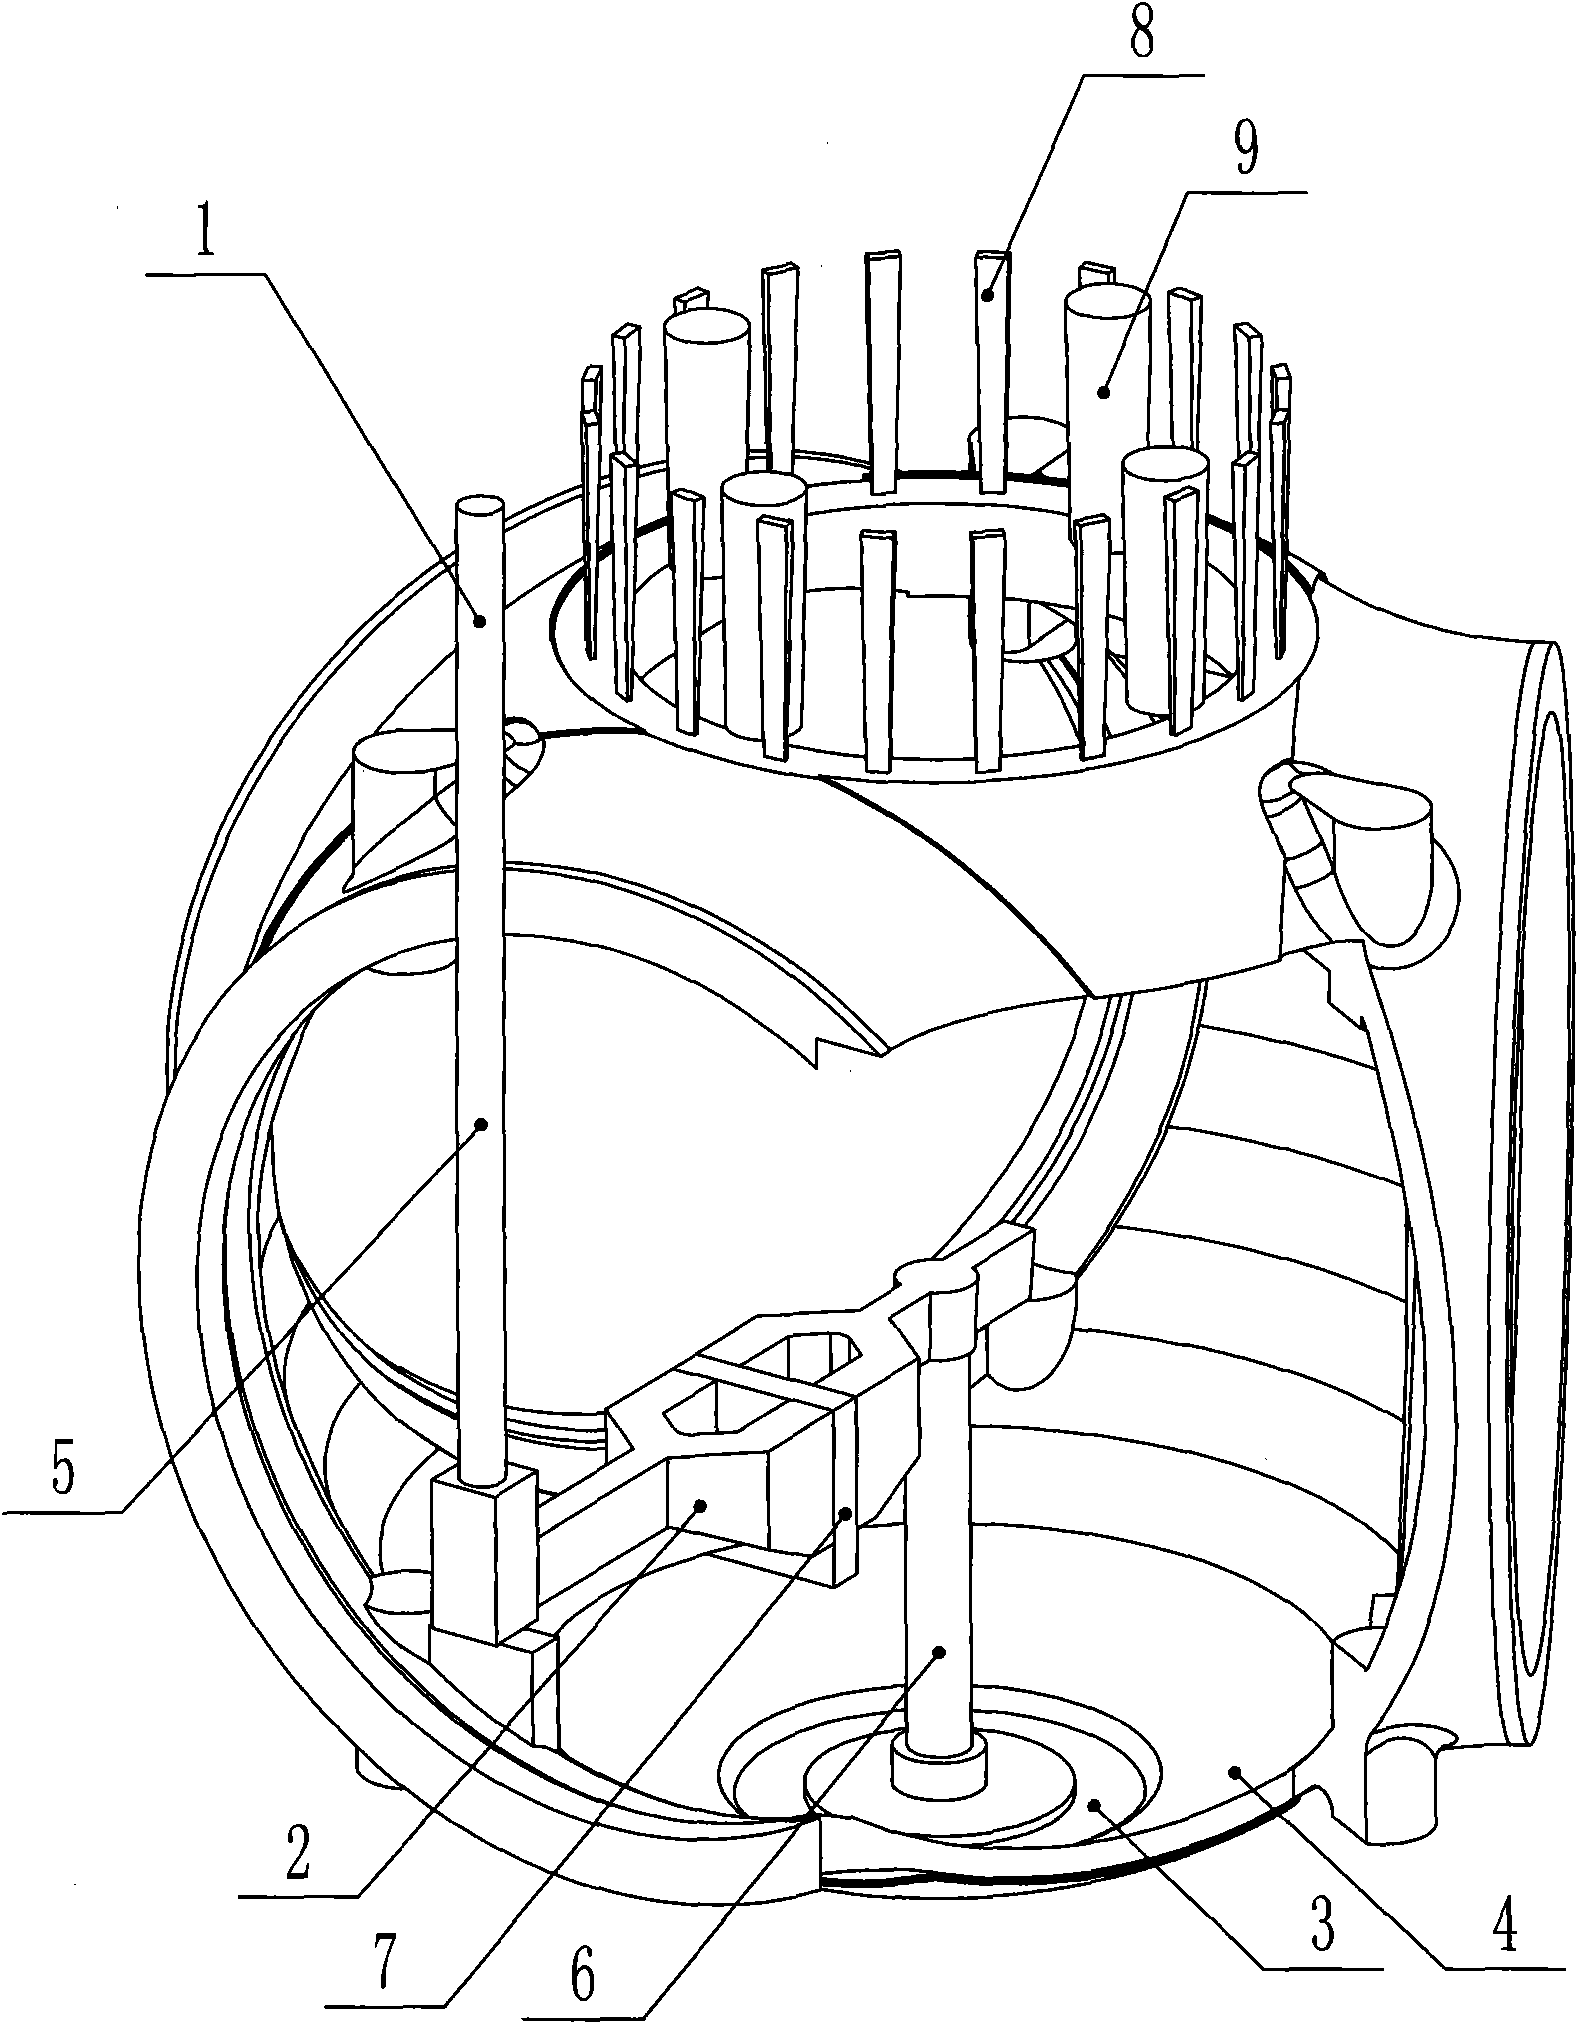 Method for casting hub casts of aerogenerators